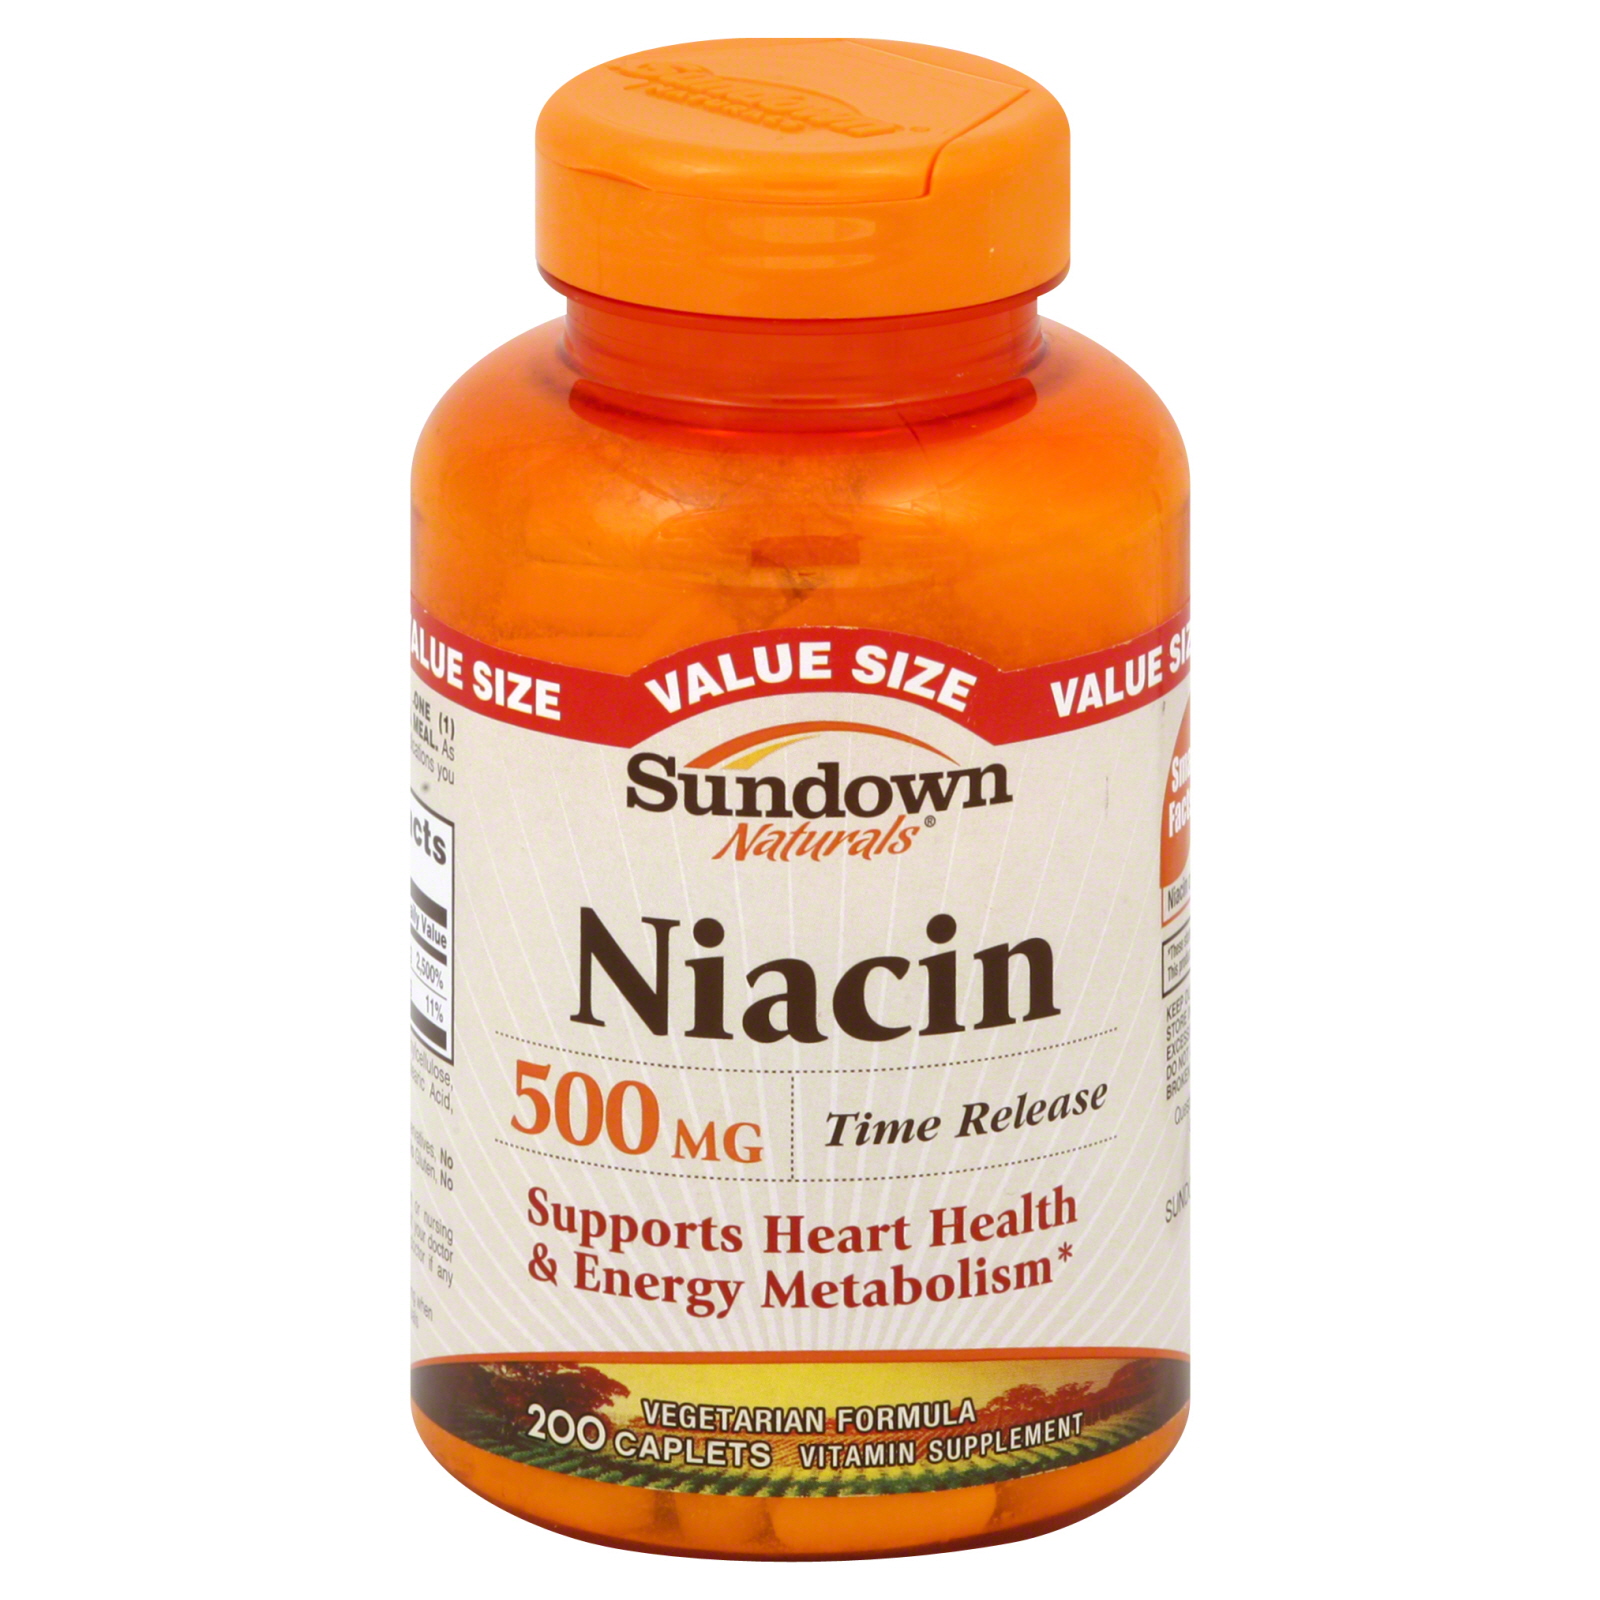 Sundown Niacin, 500 mg, Caplets, Value Size 200 caplets